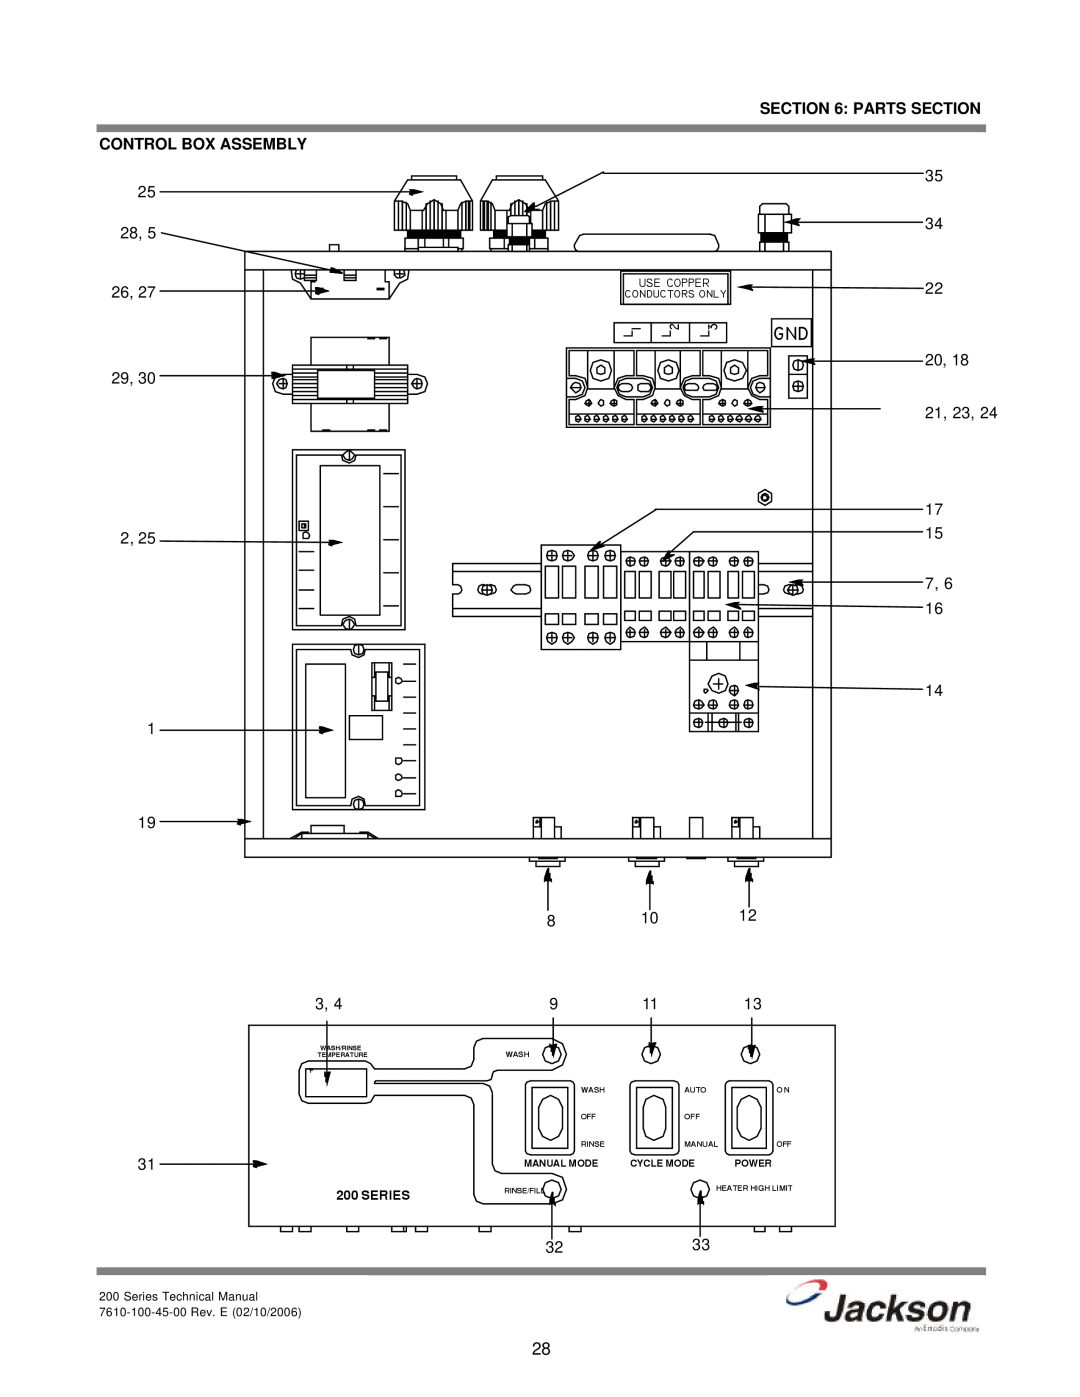 Jackson Parts Section Control Box Assembly, Jackson, Series Technical Manual 7610-100-45-00 Rev. E 02/10/2006, Wash 